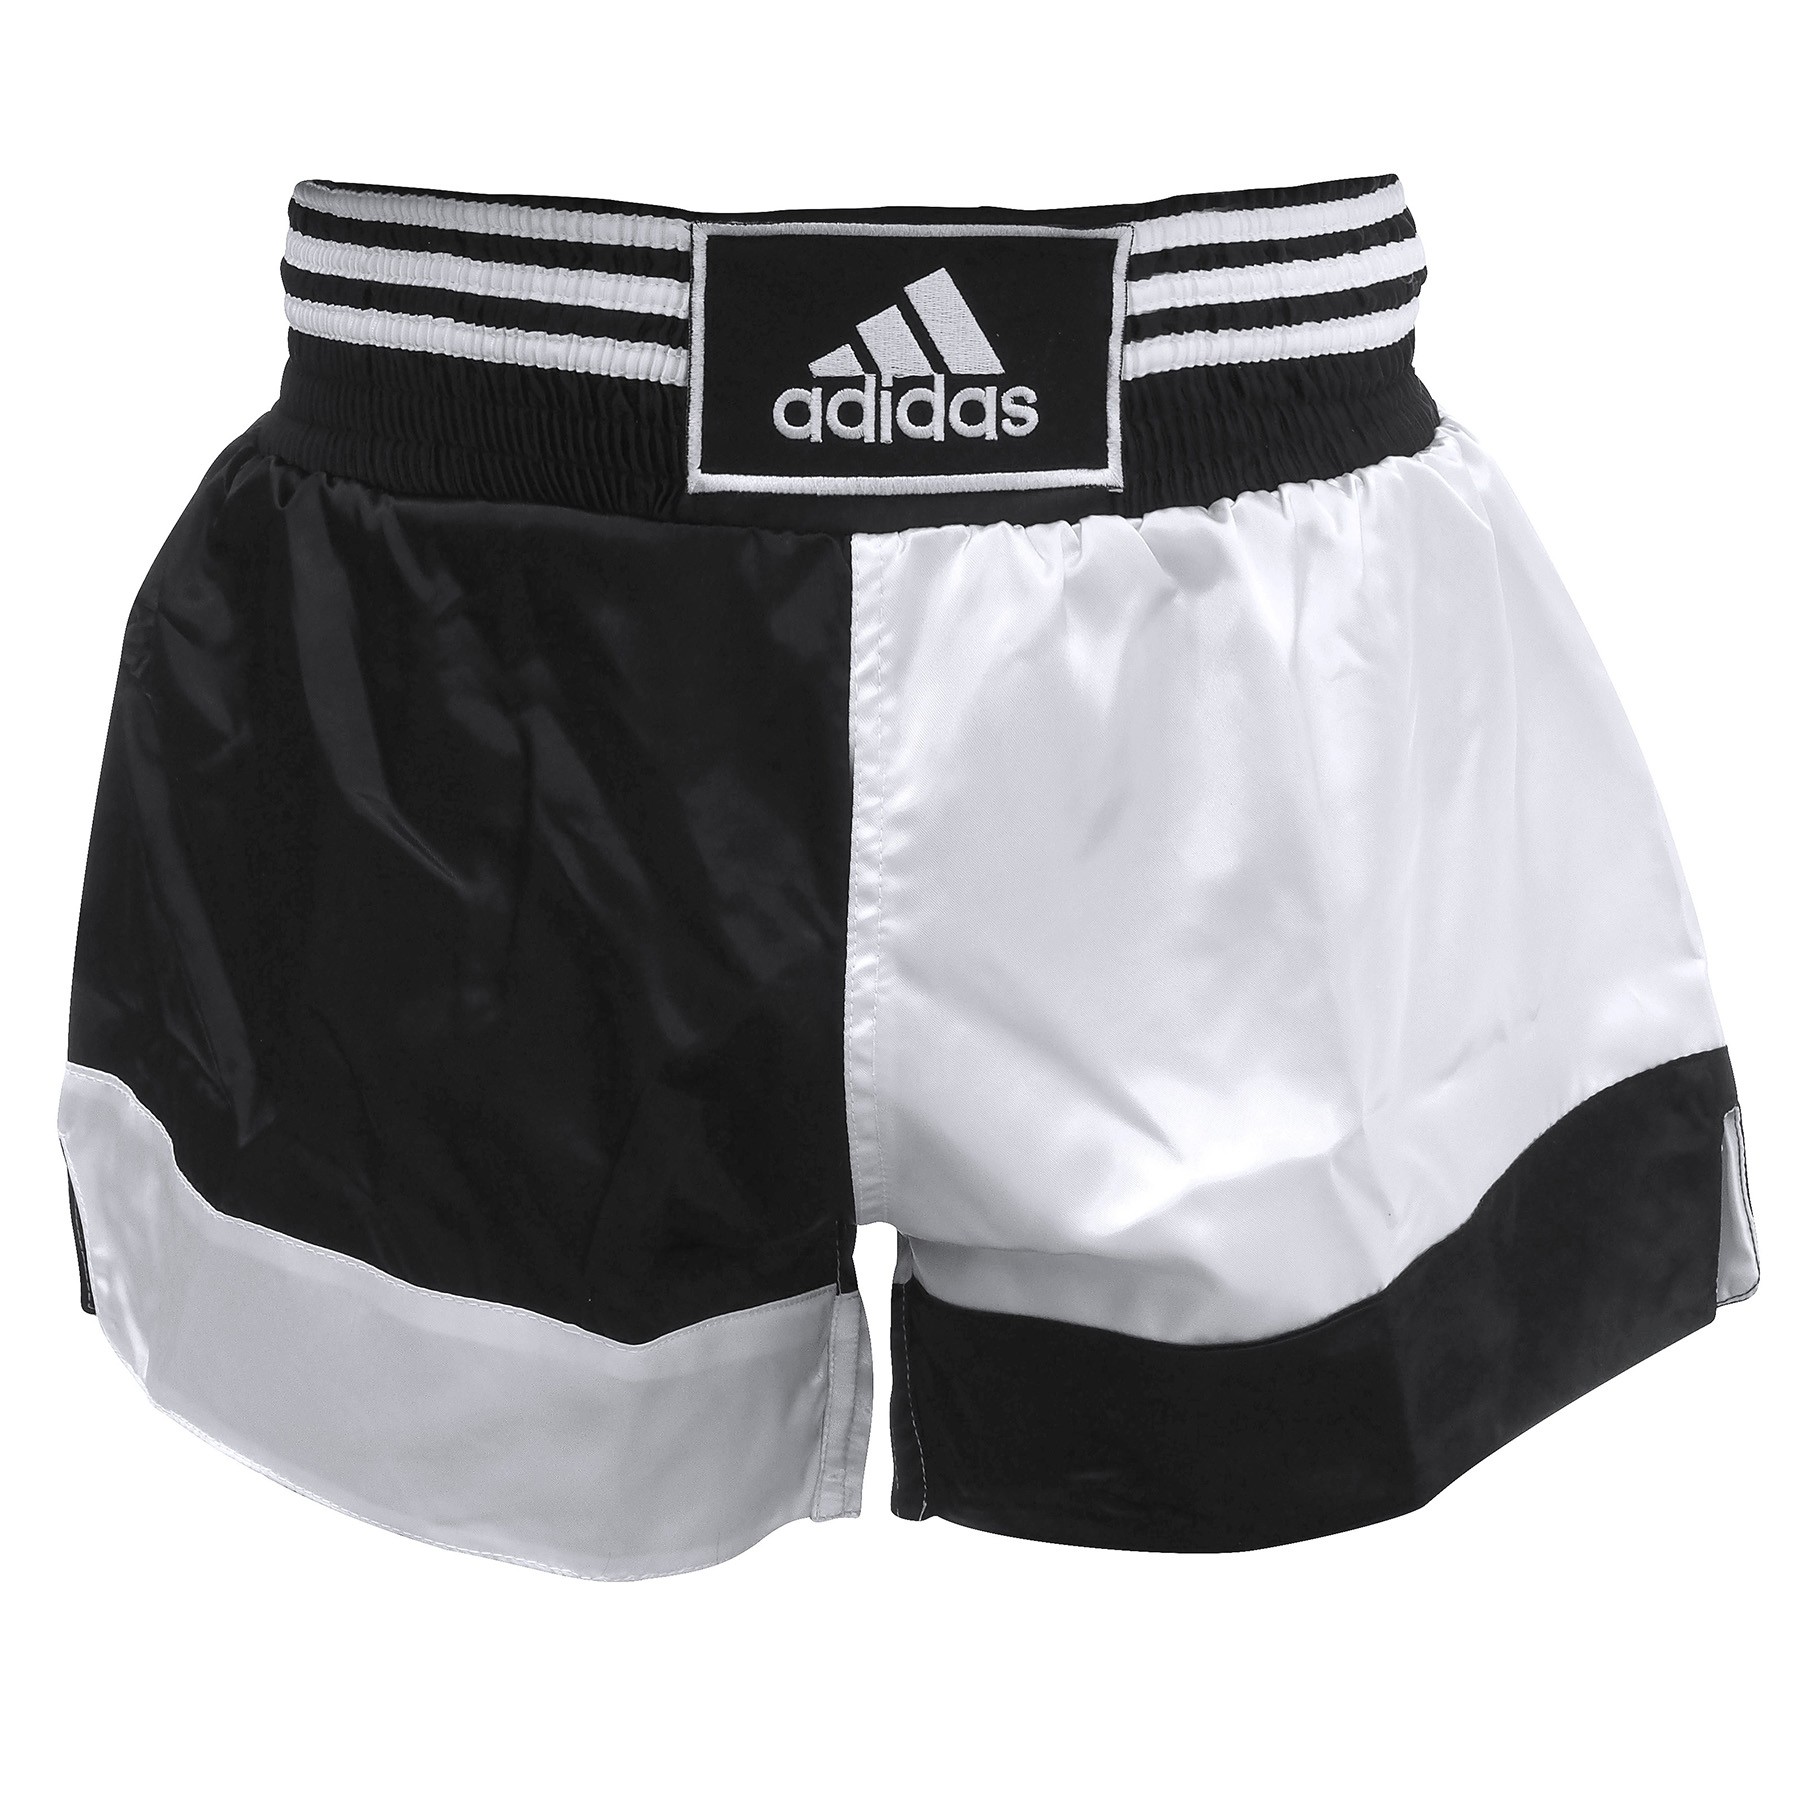 Adidas Boxers shorts. Шорты адидас для кикбоксинга. Шорты Санса. Kich Boxing Legion MD одежда, Black.